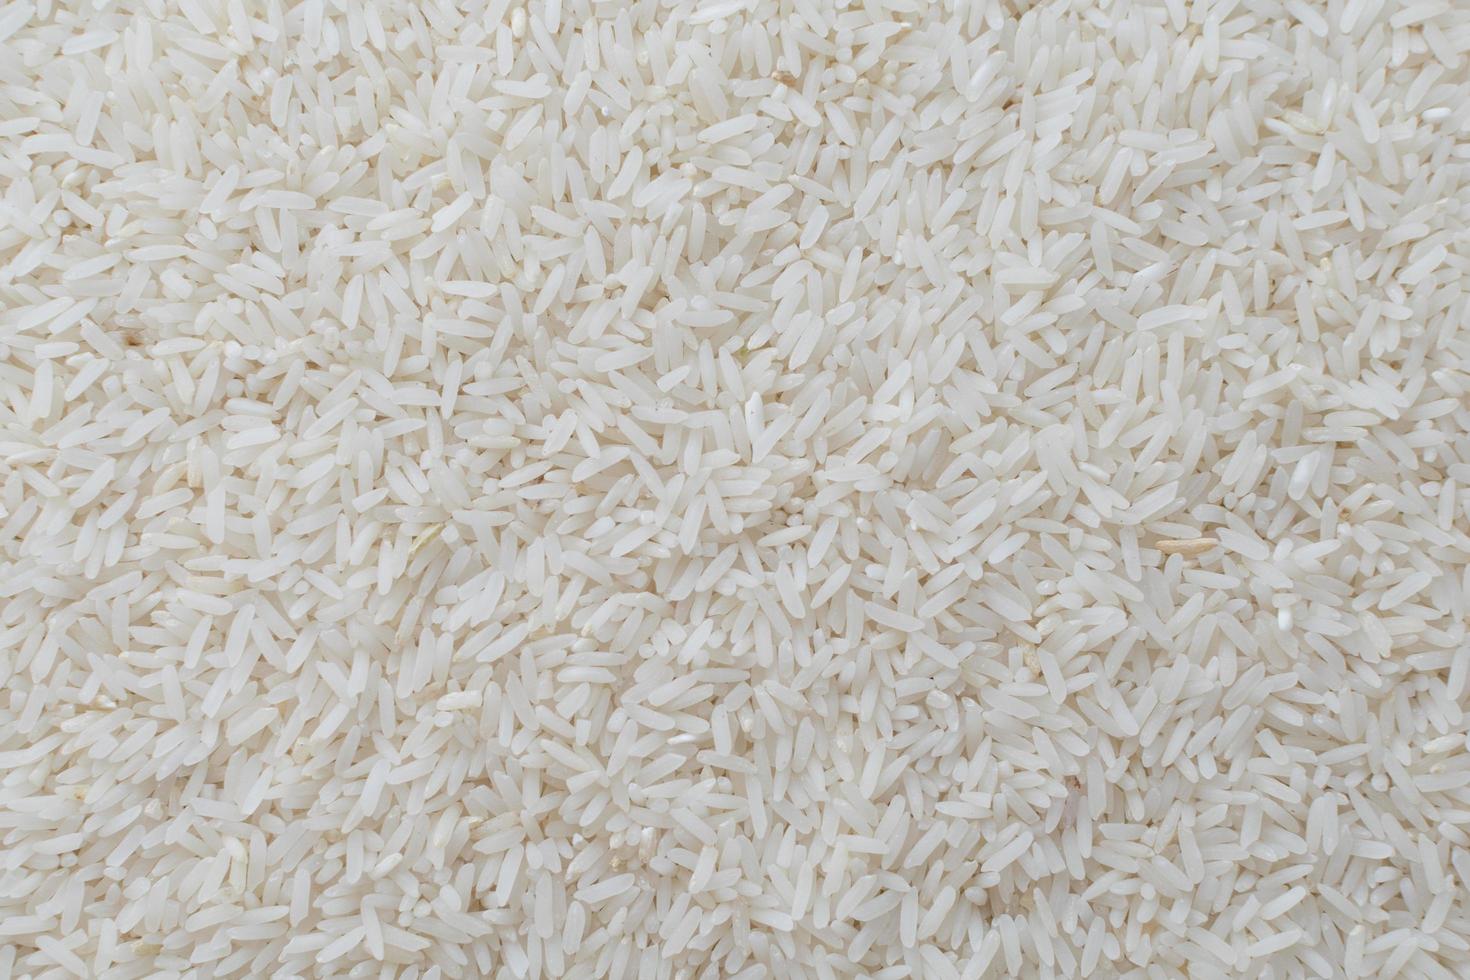 jasmine rice. food photo